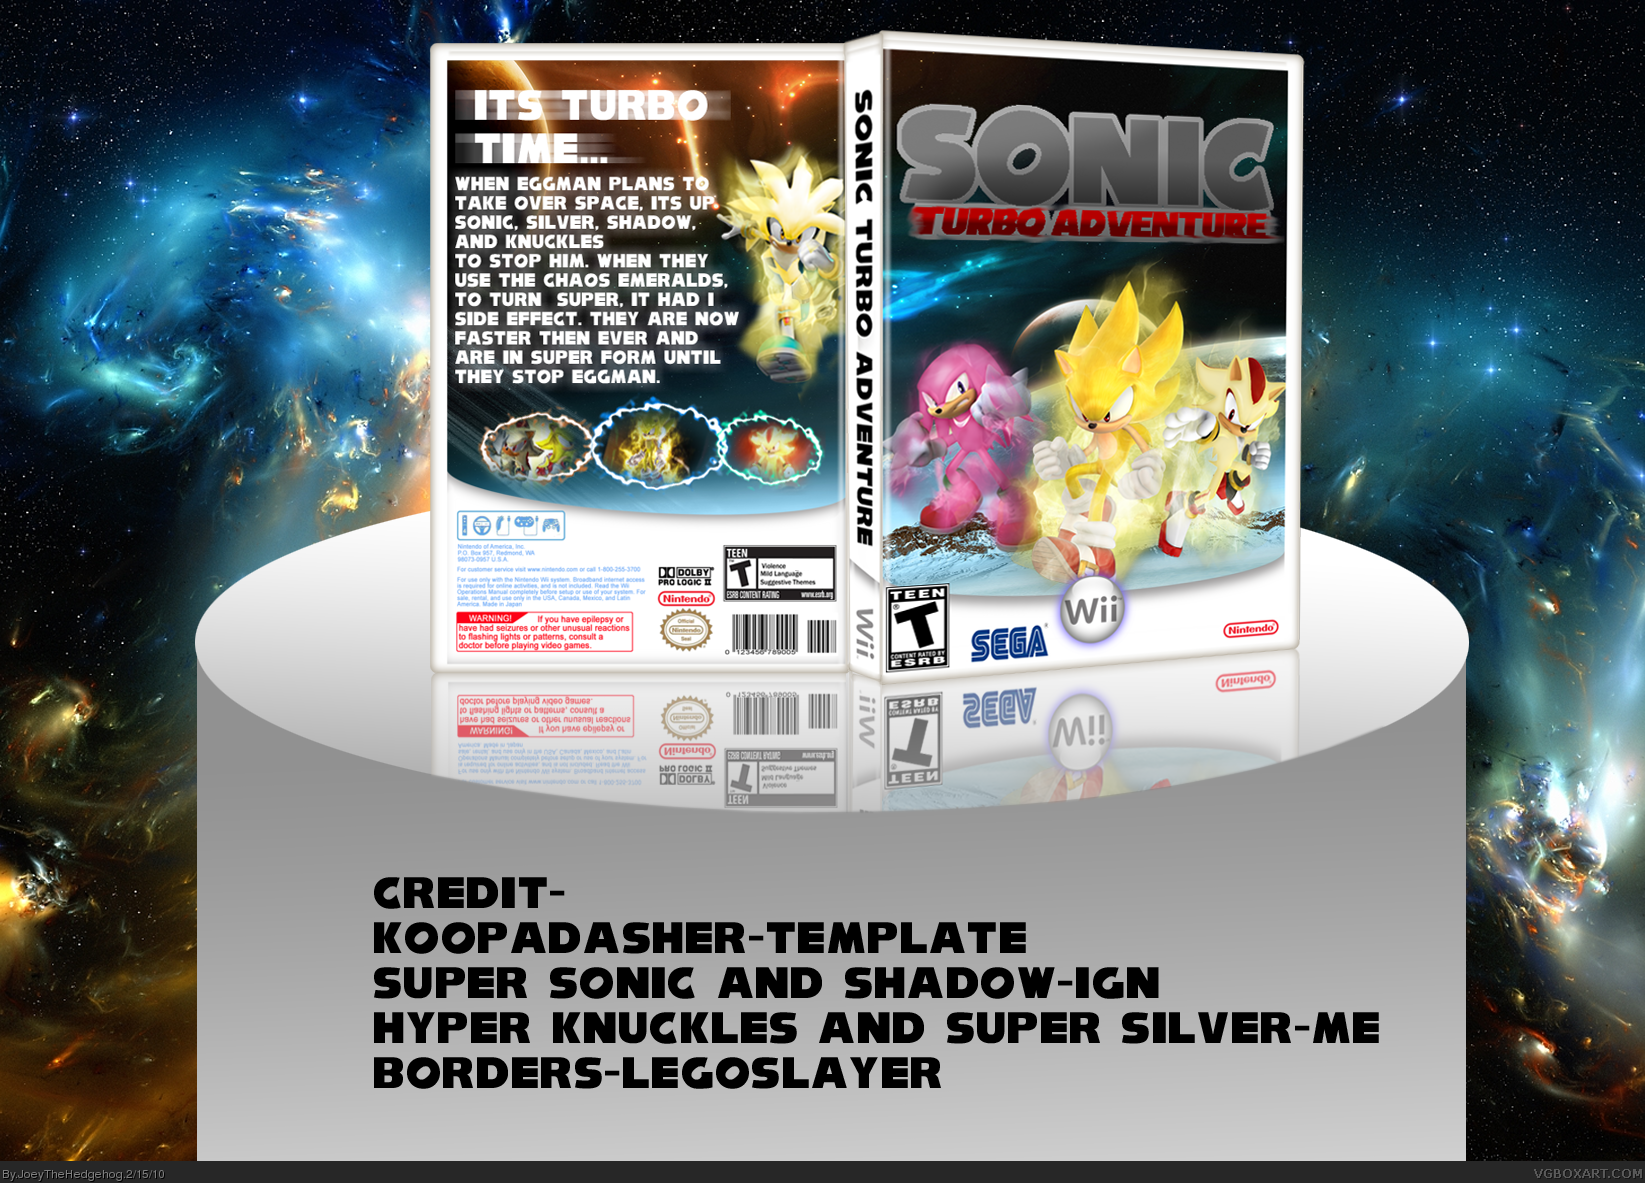 Sonic Turbo Adventure box cover